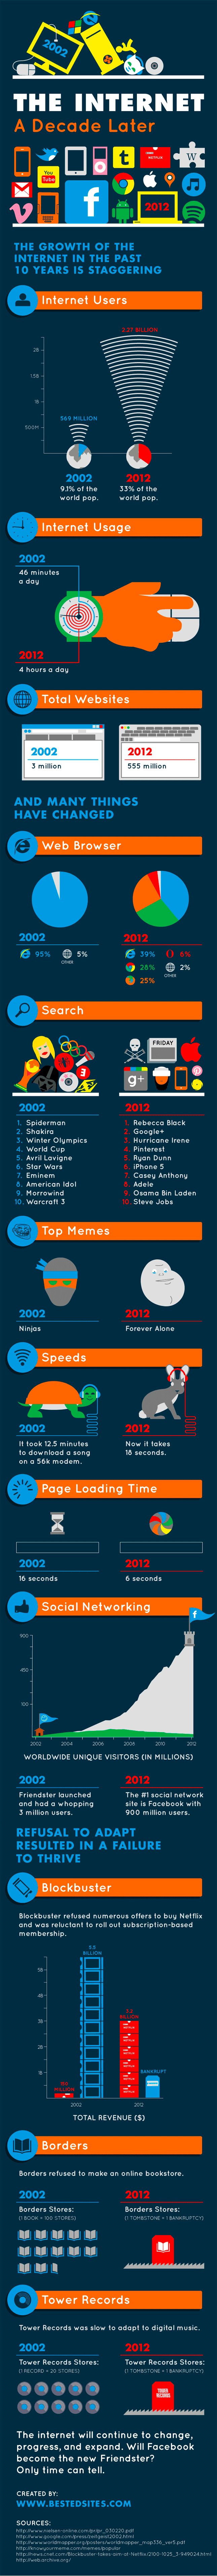 Actualidad Informática. Infografía: internet en 2012 frente 10 años atrás. Rafael Barzanallana